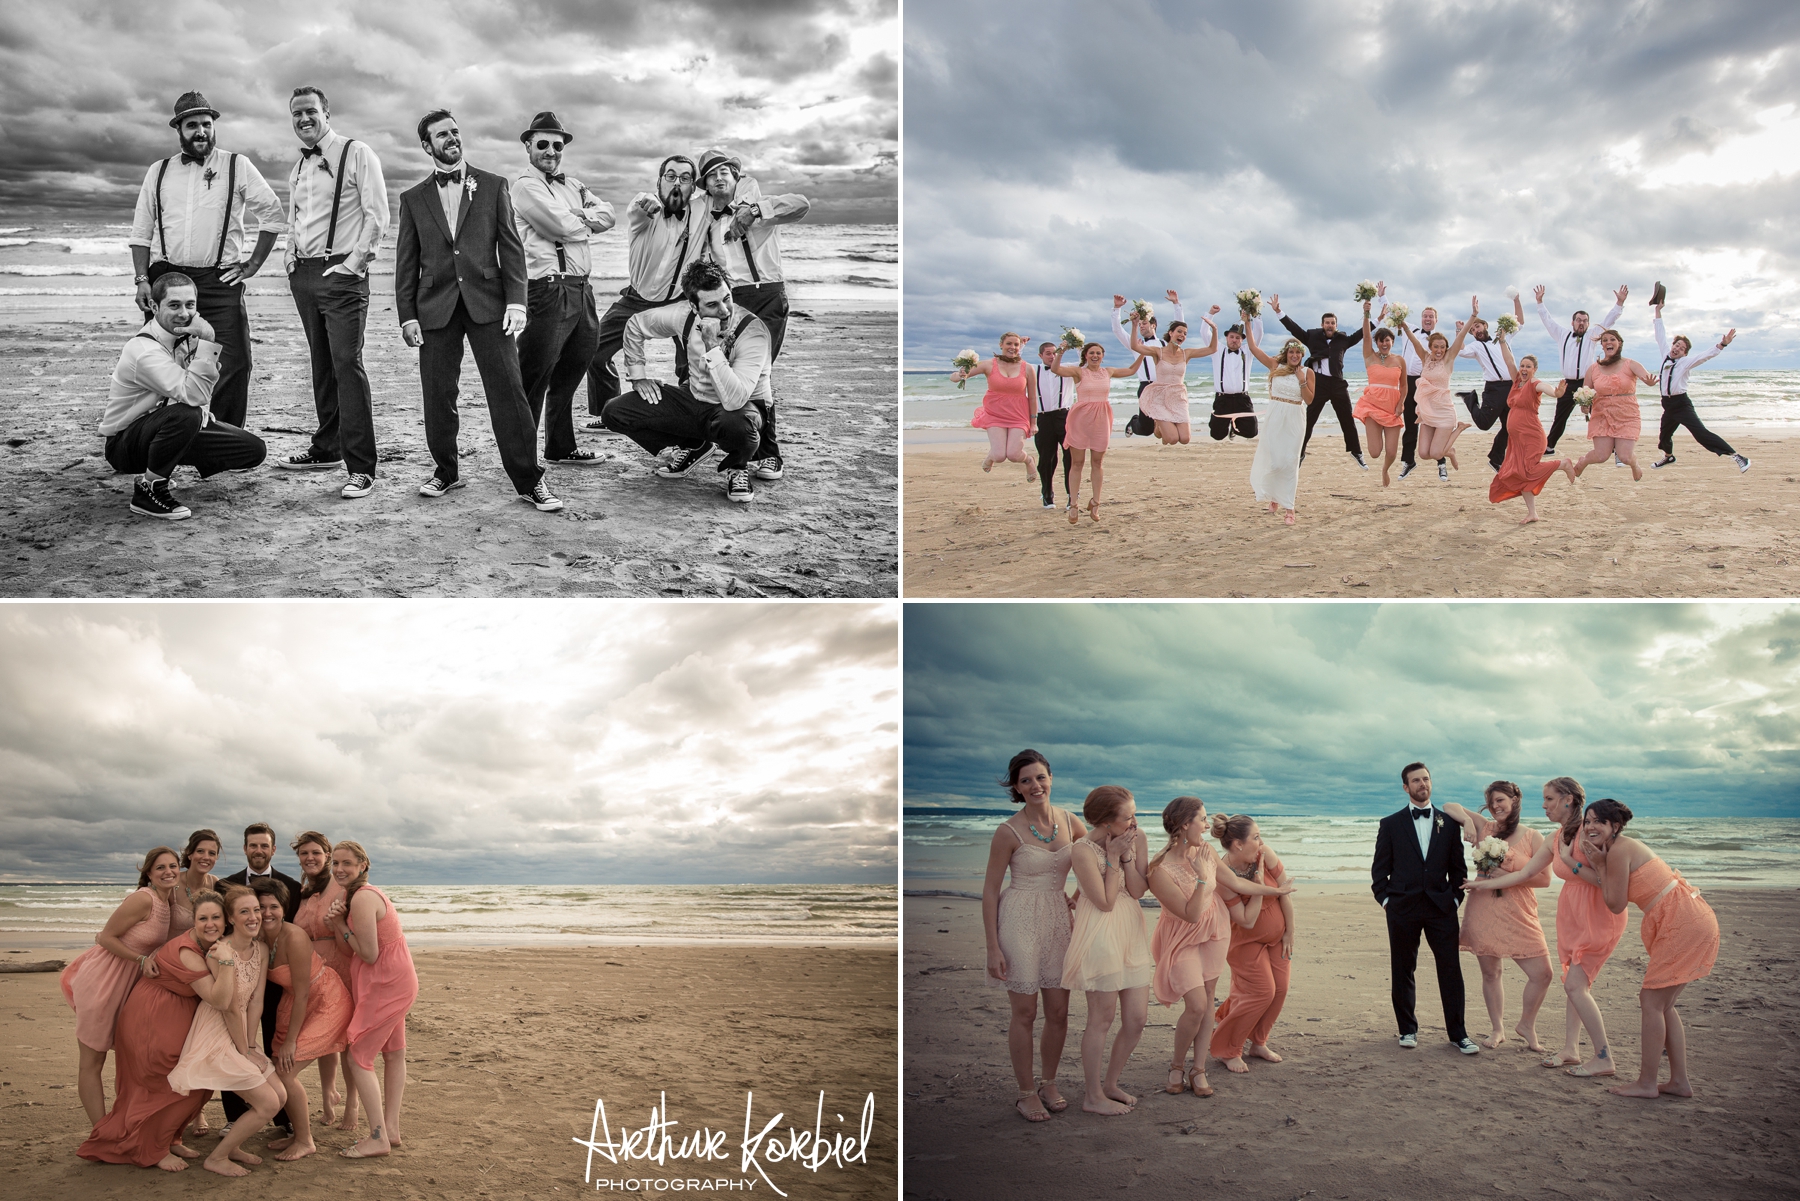 Arthur Korbiel Photography - London Engagement Photographer - Sauble Beach Barn Wedding - Samantha & Dan_008.jpg